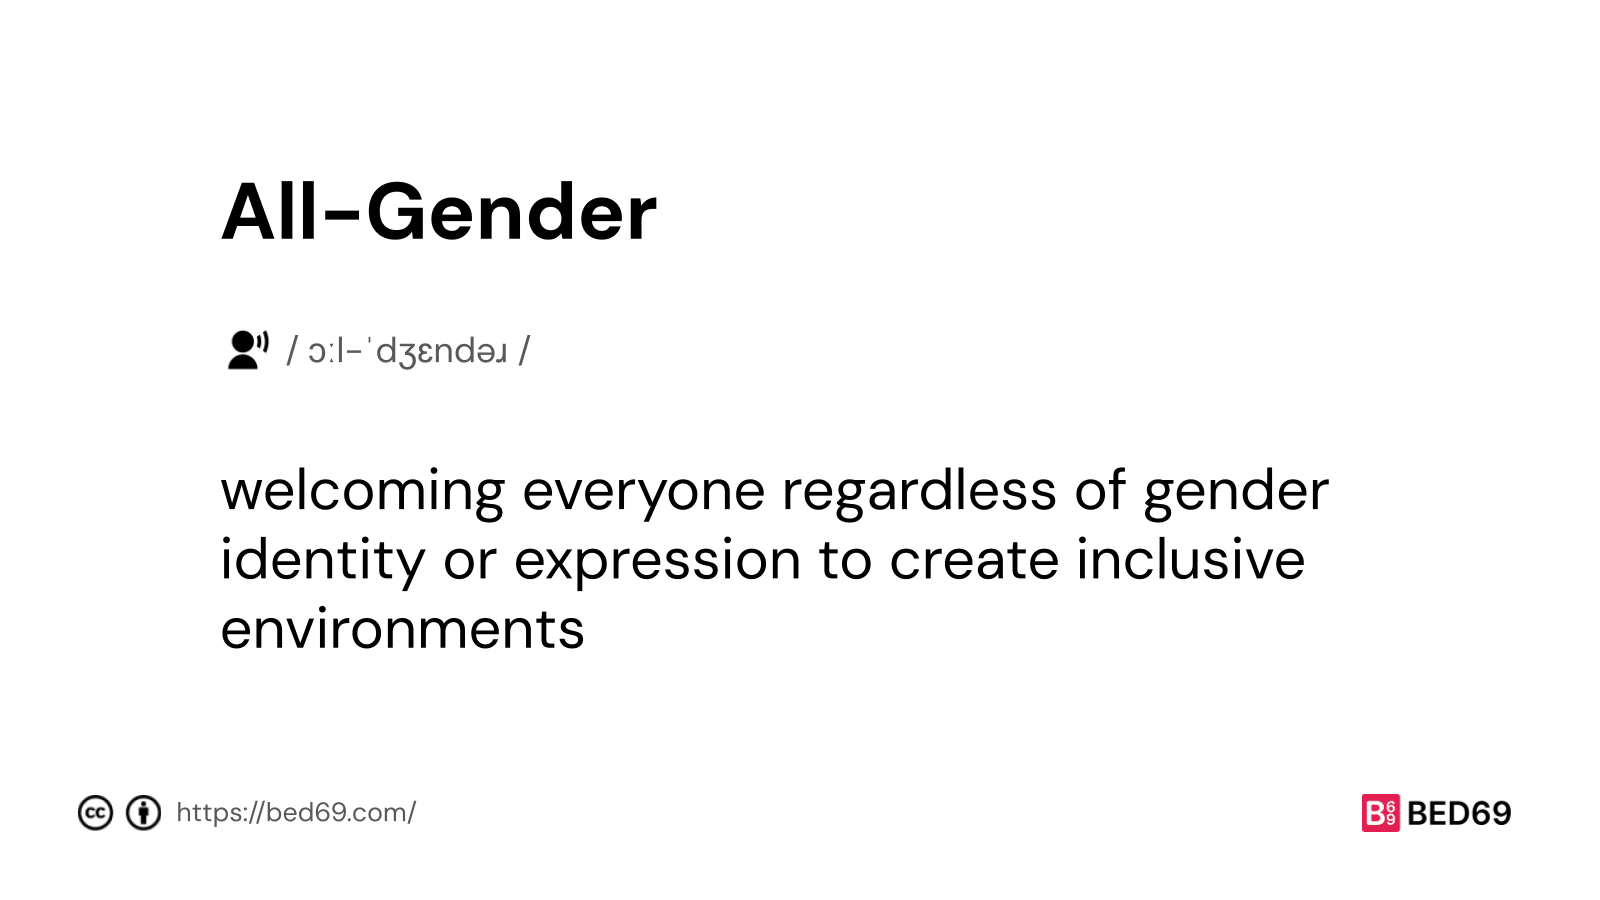 All-Gender - Word Definition